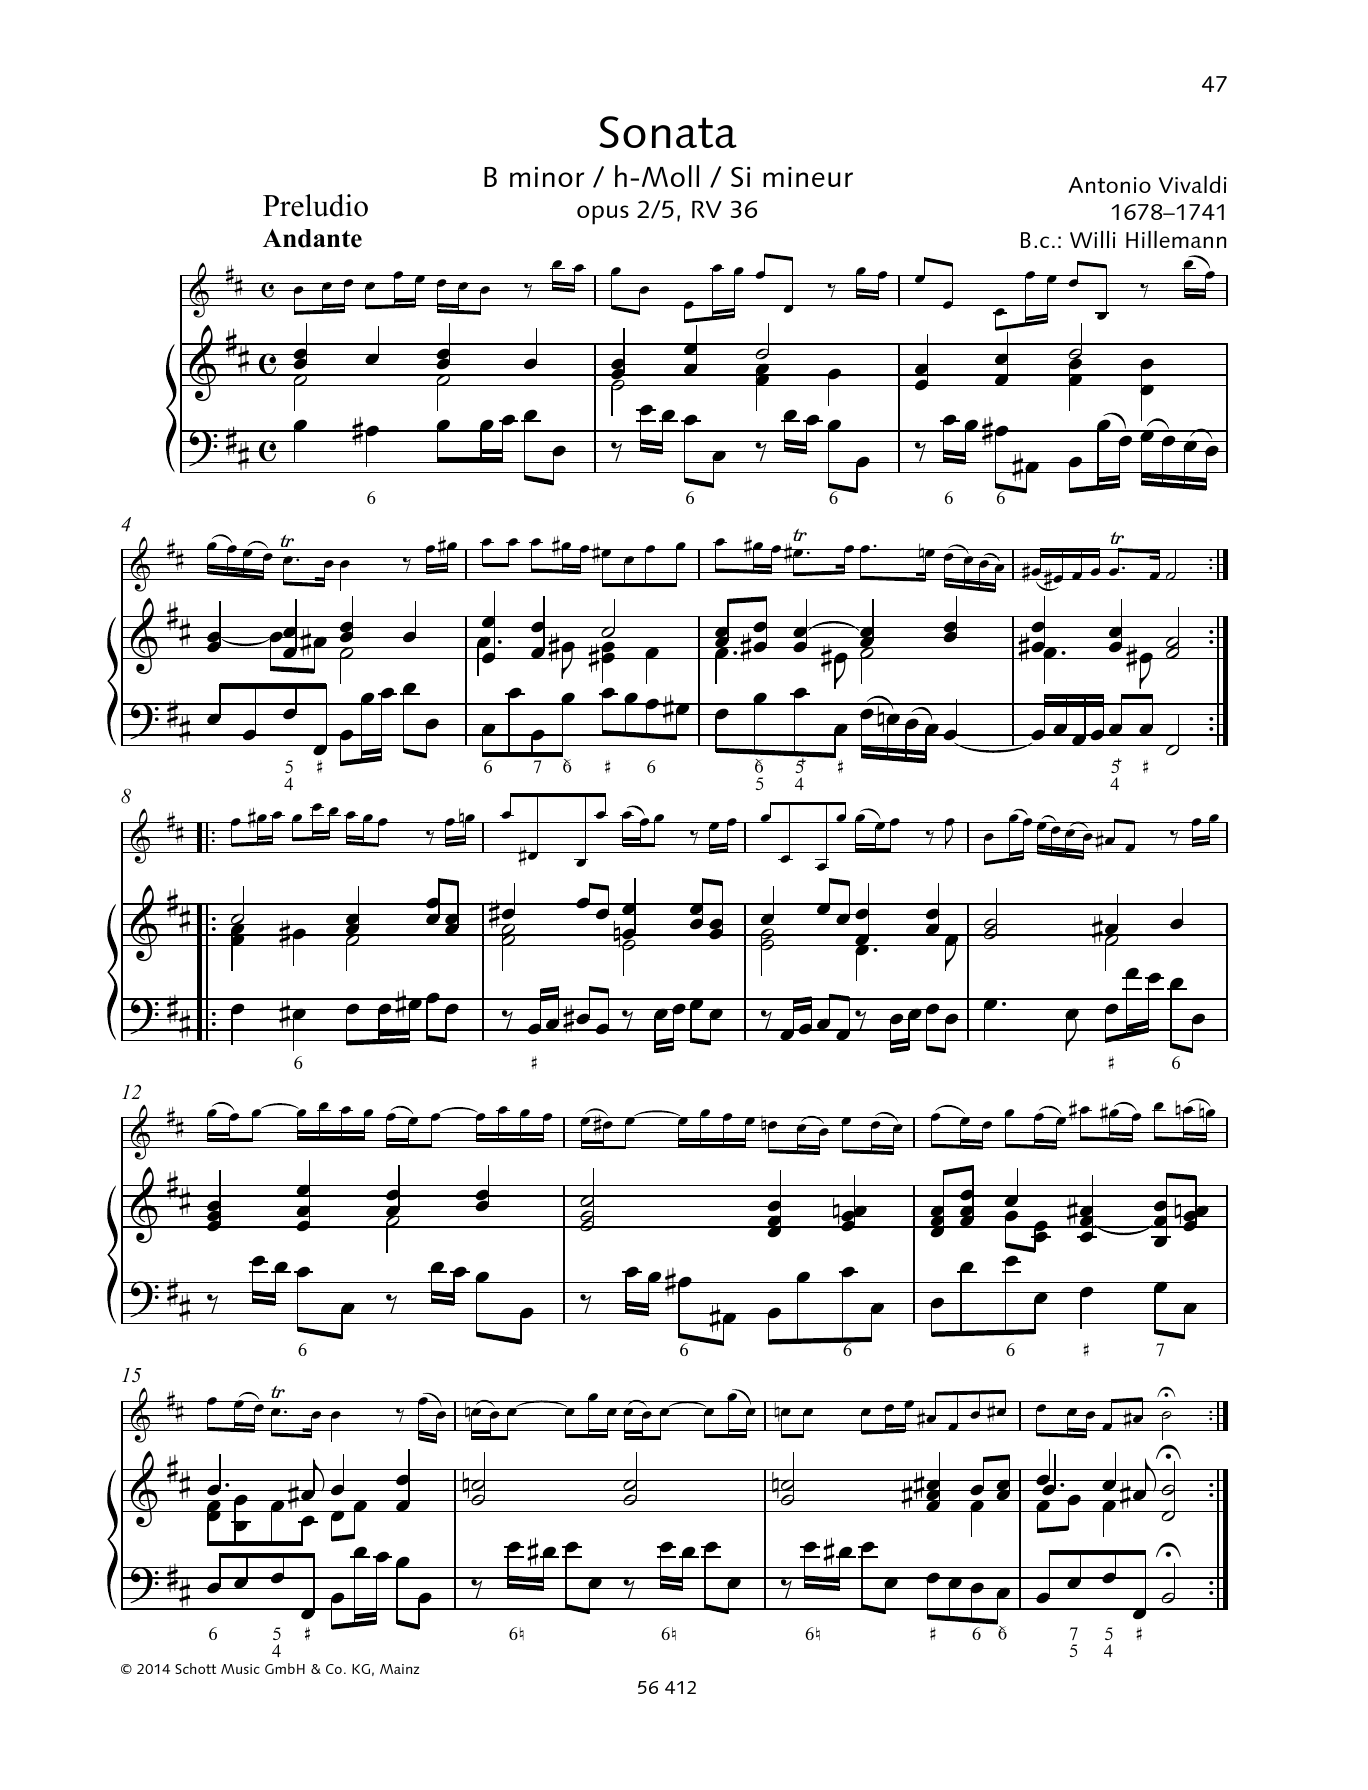 Sonata B Minor sheet music